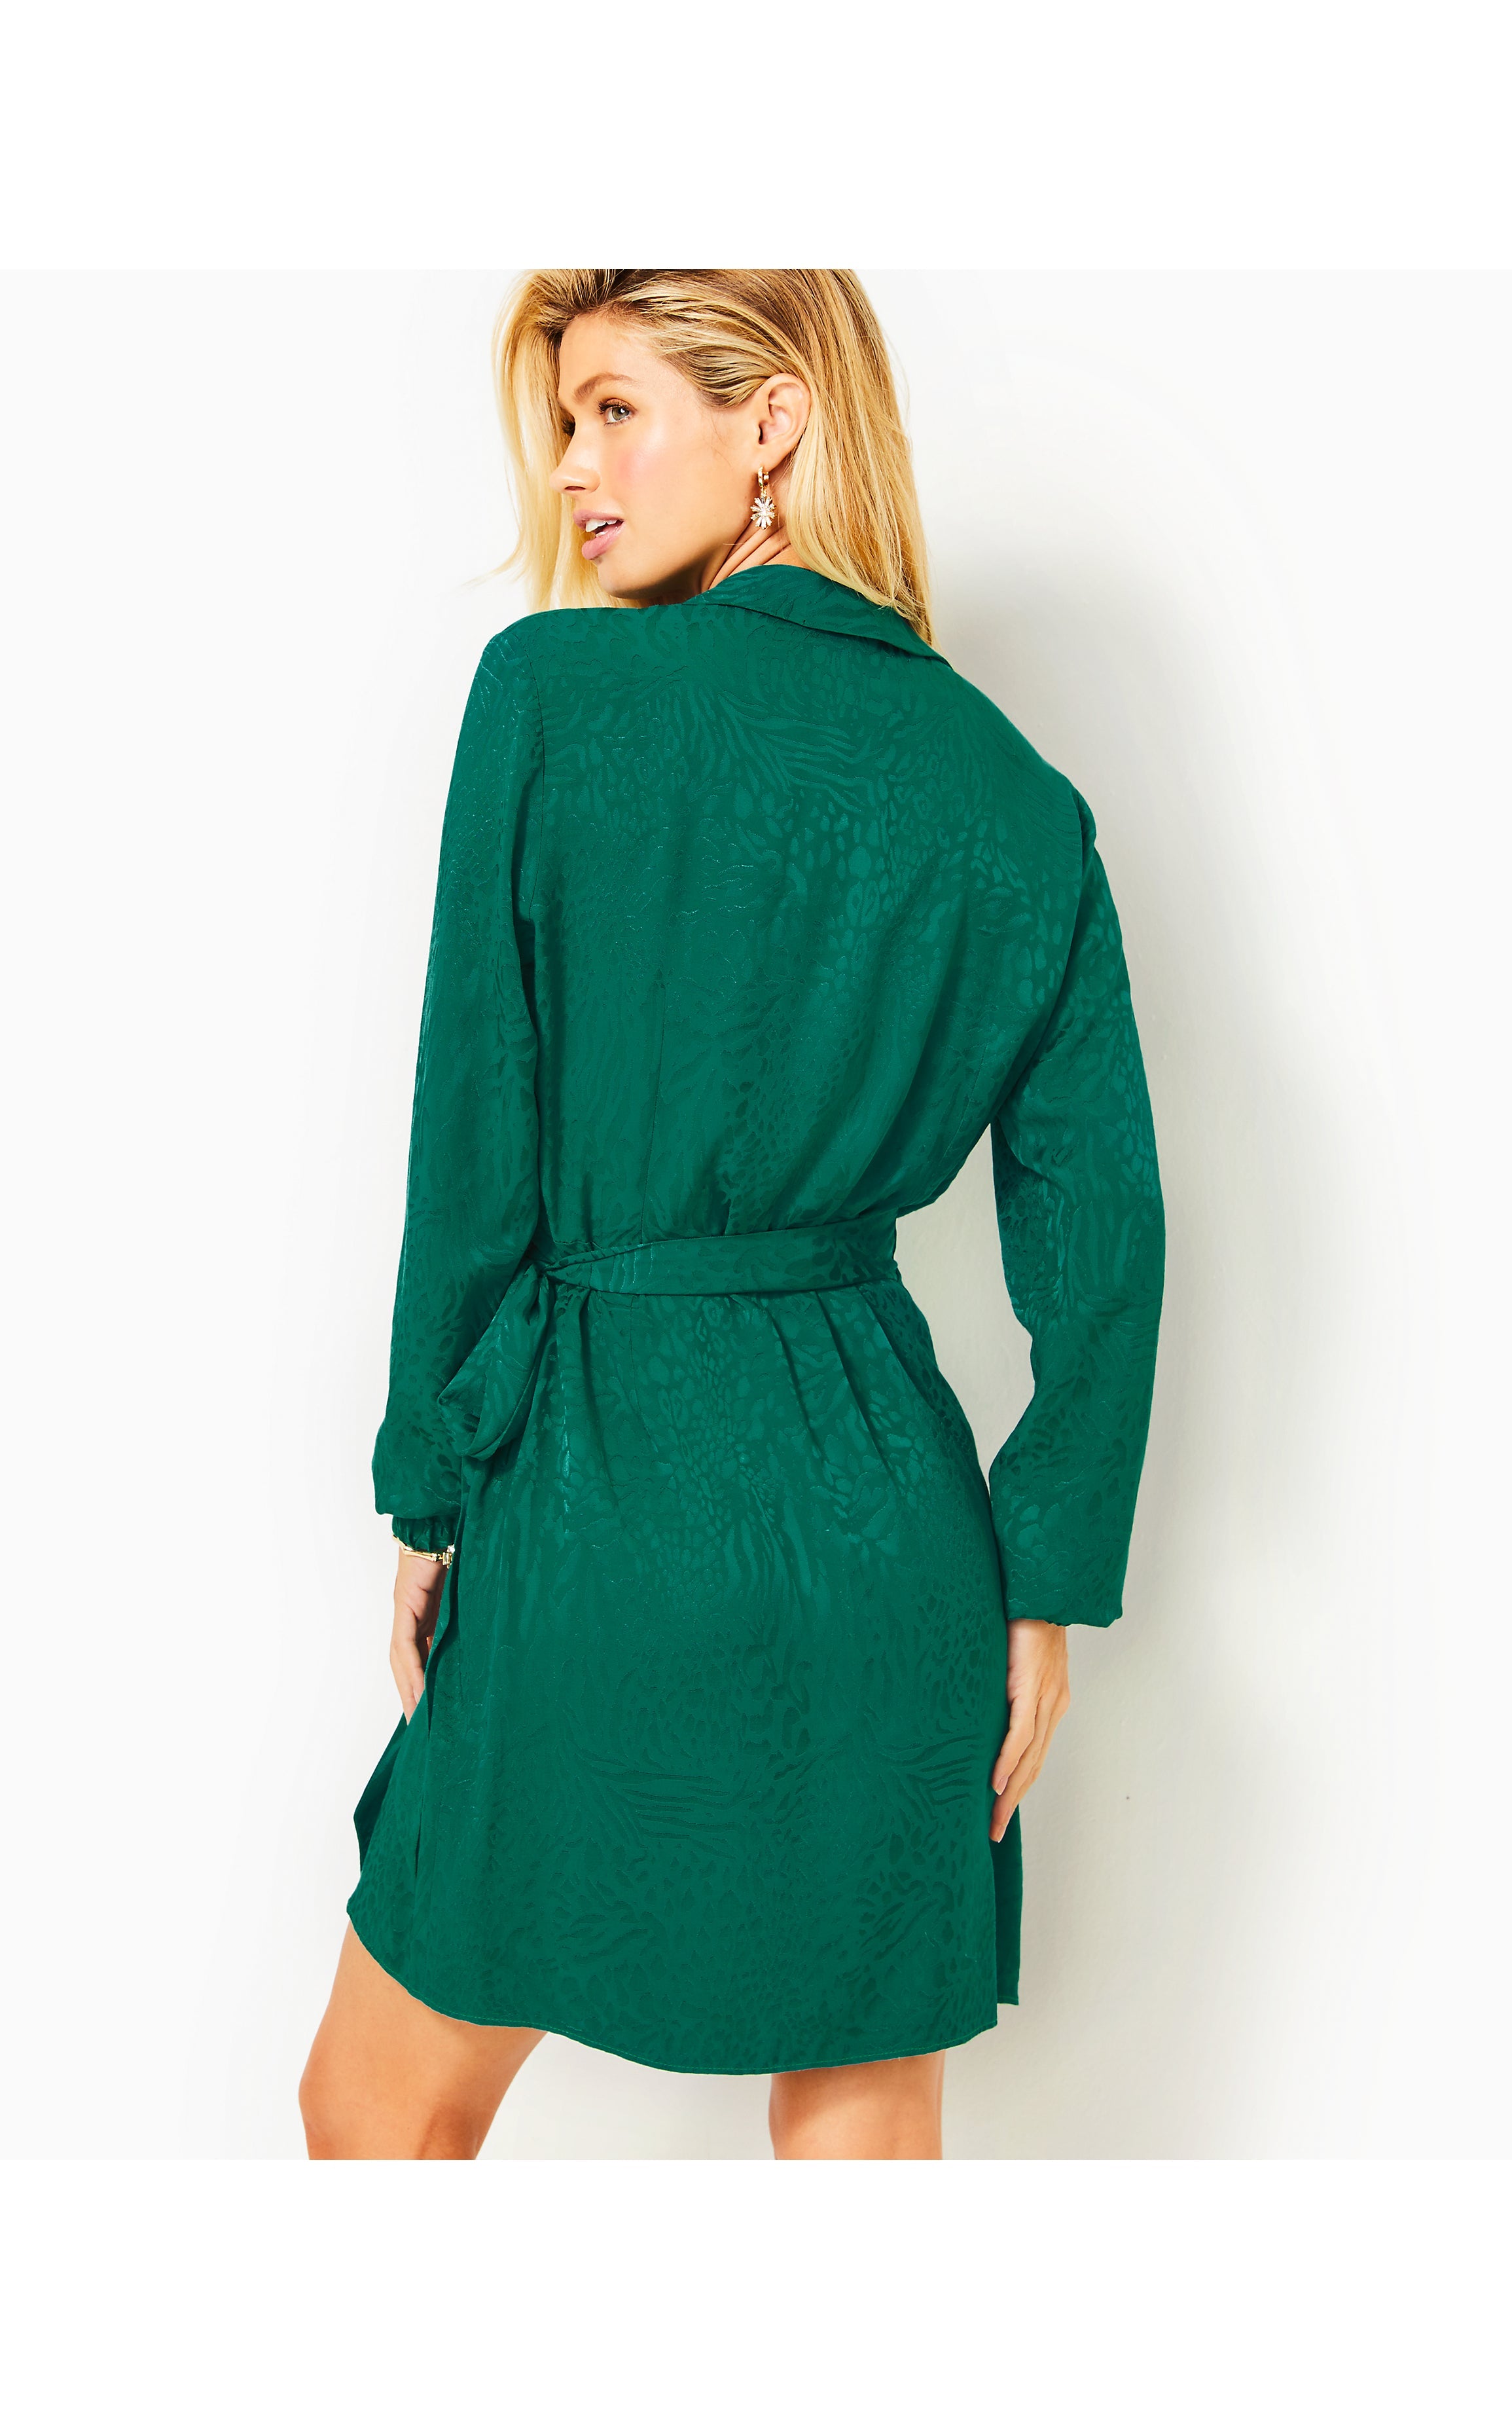 Nicolina Long Sleeve Jacquard Dress | Evergreen Party Animal Jacquard